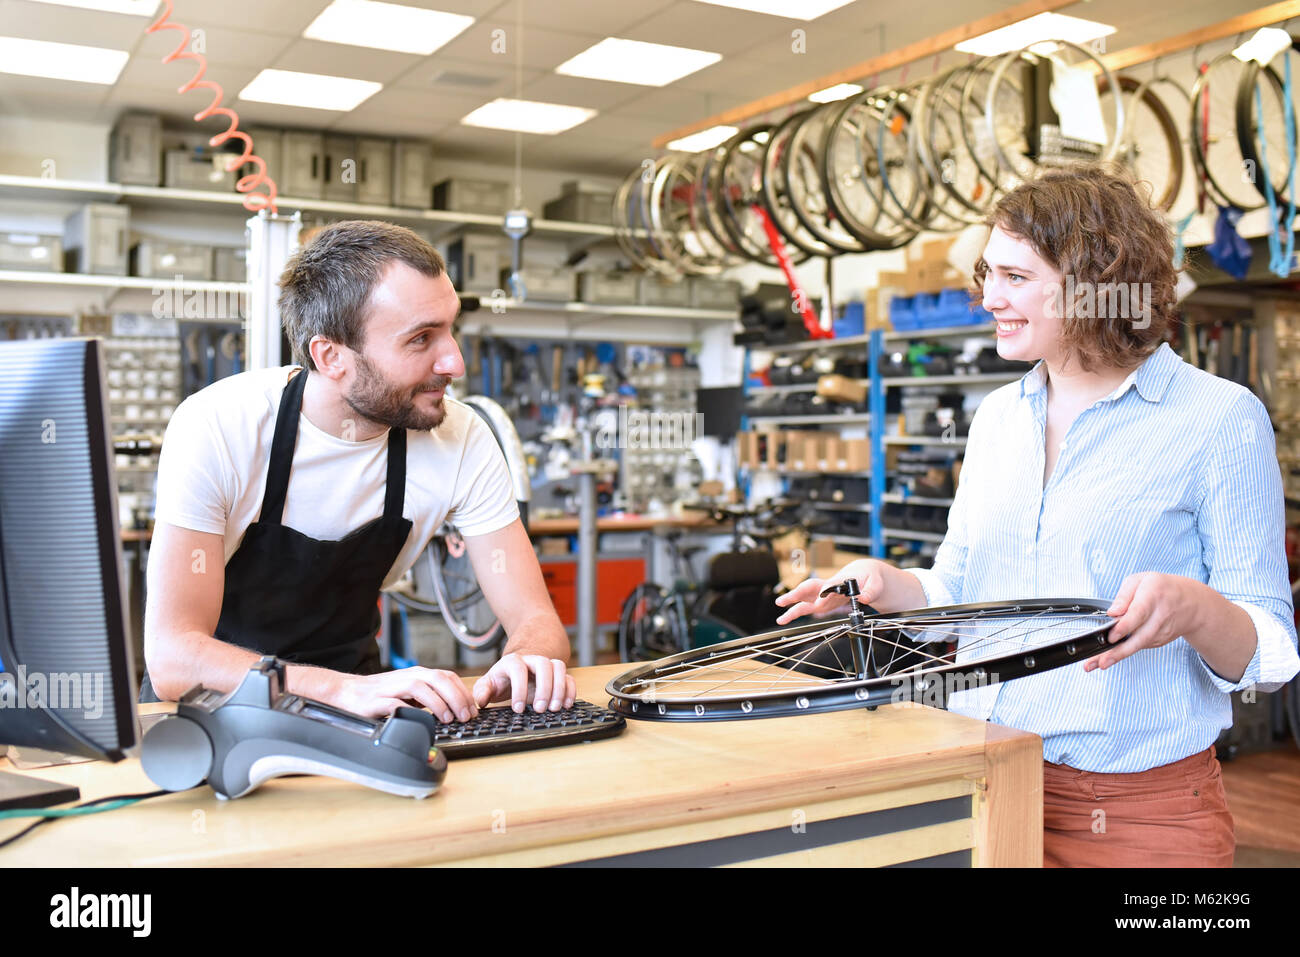 Fahrrad shop Beratung - Verkäufer und Kunden im Gespräch Stockfoto